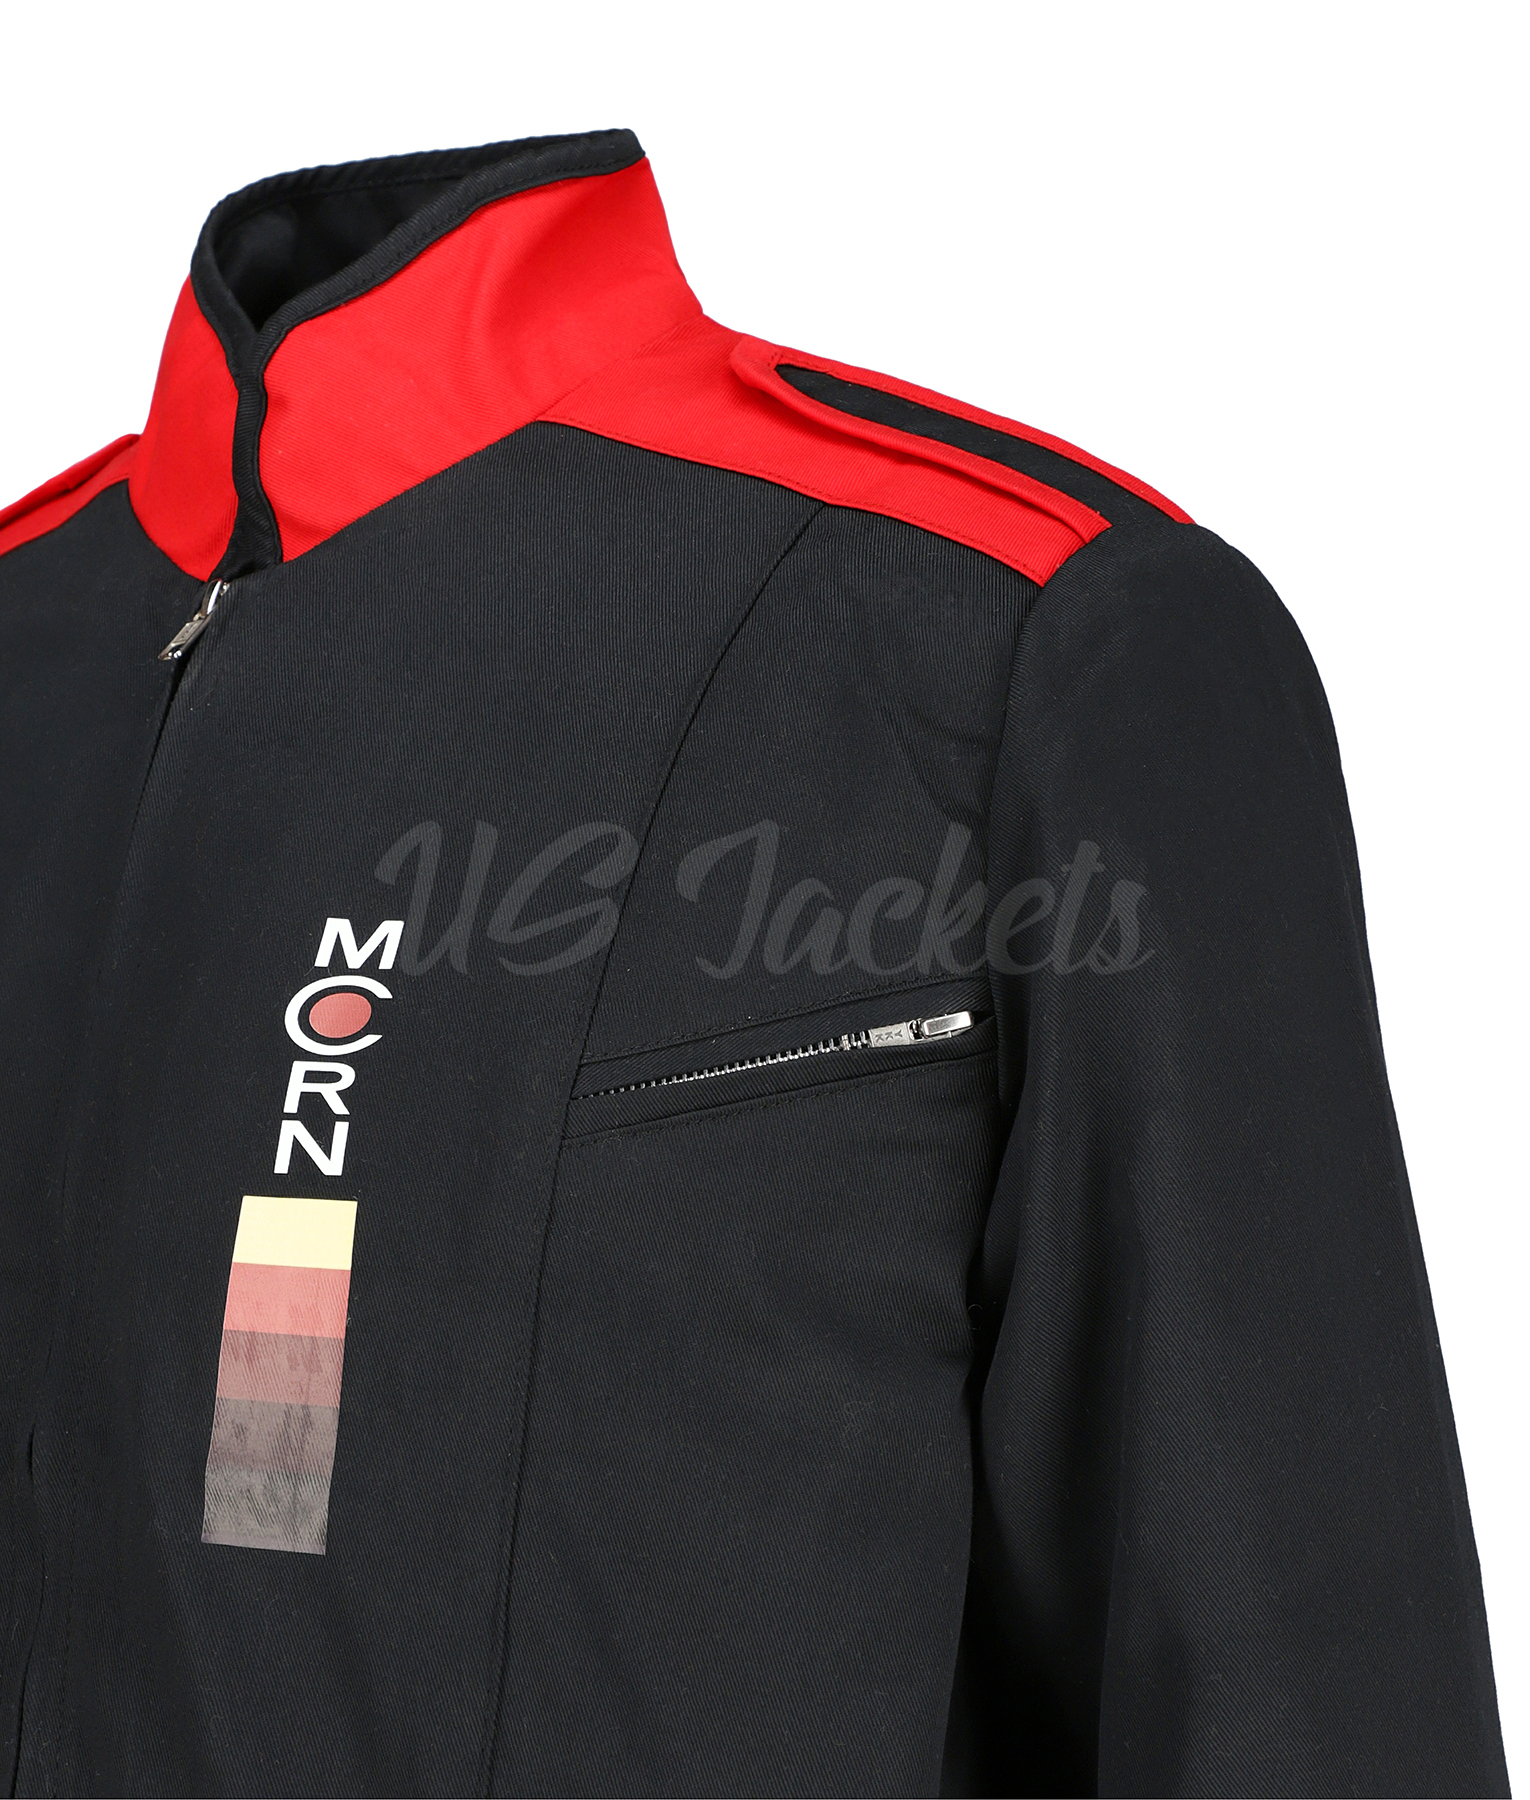 MCRN Mens Fleece Black Jacket (4)